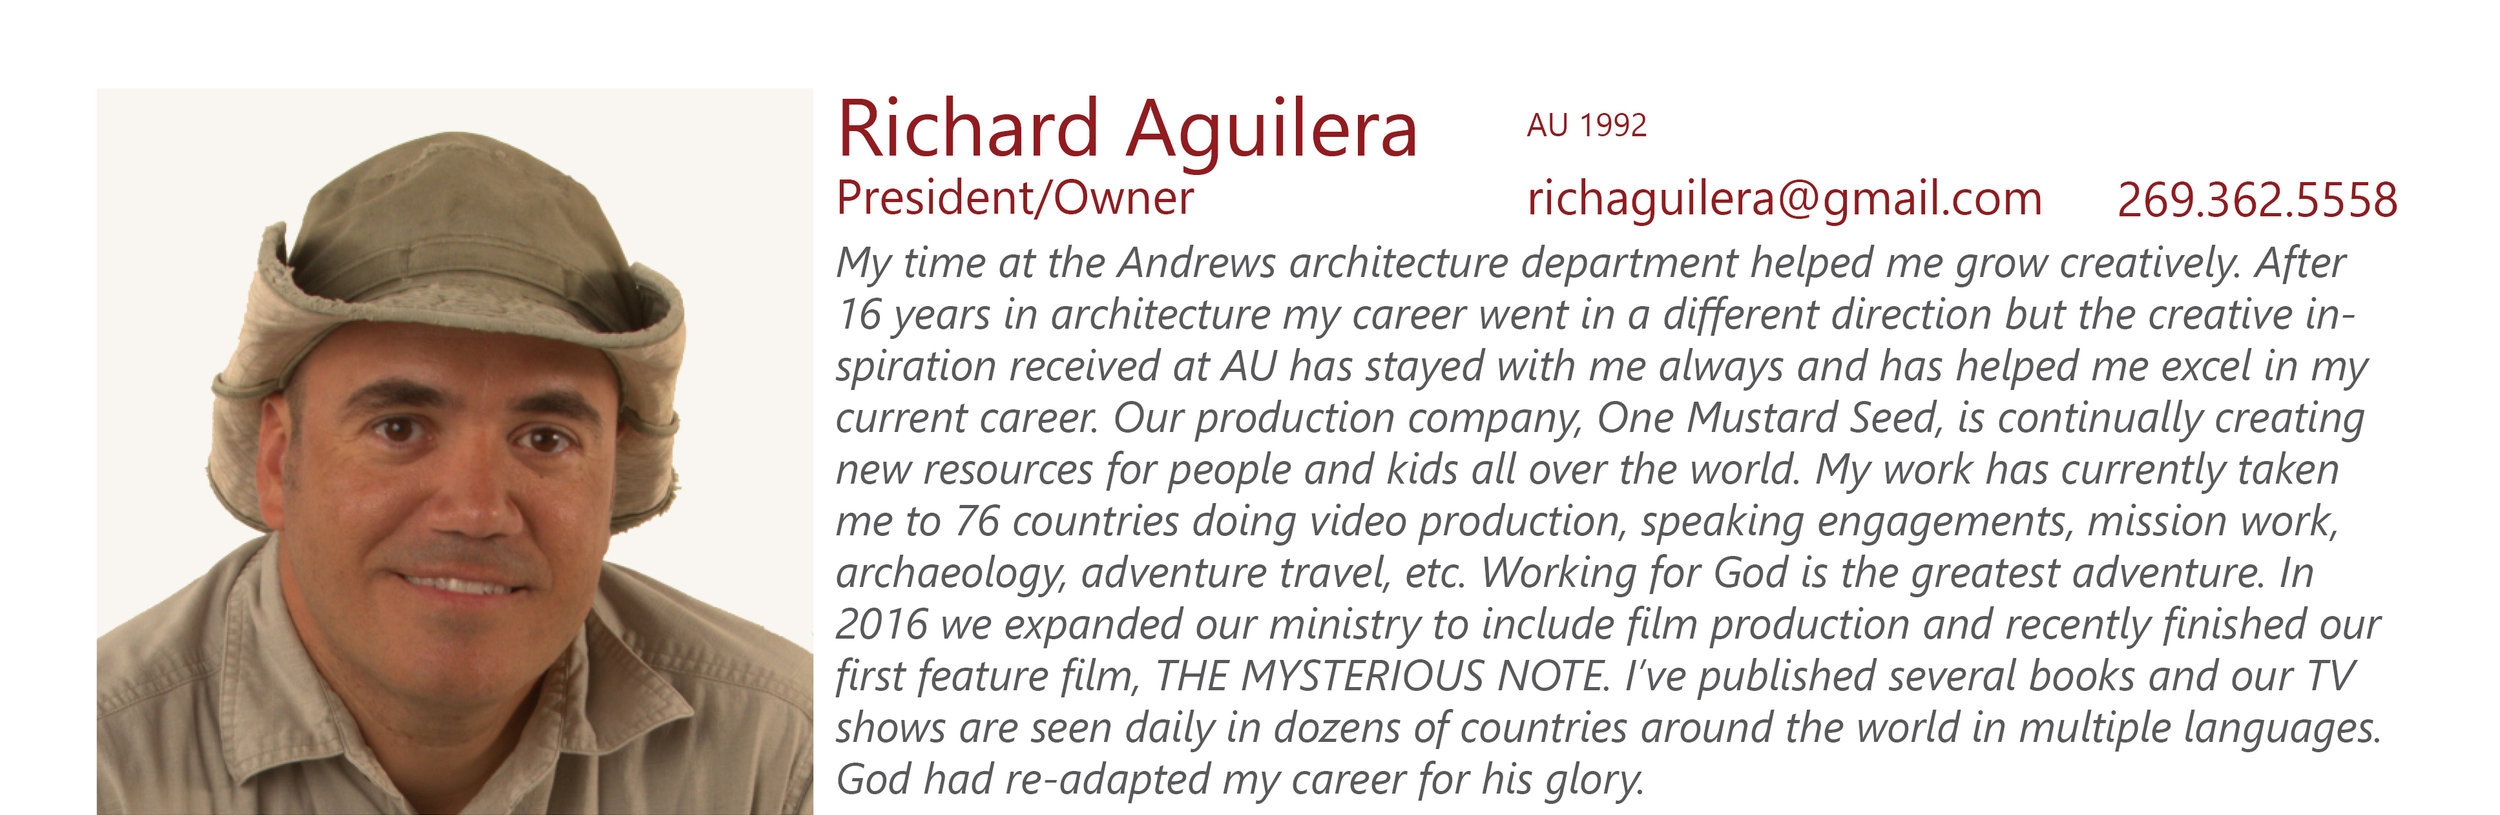 Richard Aguilera.jpg